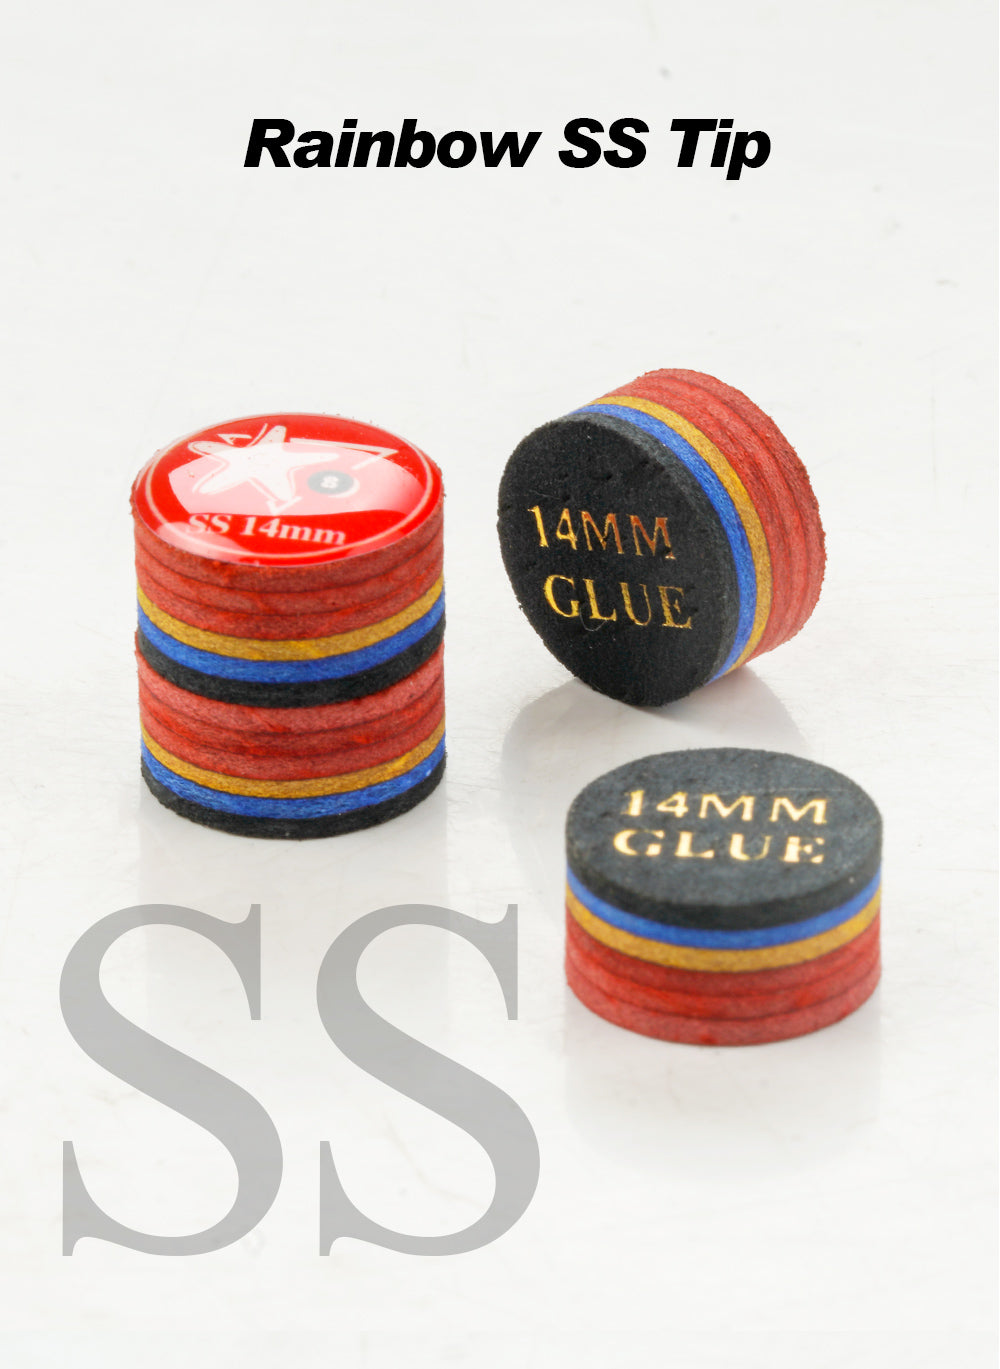 CRICAL Rainbow Tip 5pcs Billiards Tips  SX/SS/S/M/MH/H 11mm/14mm